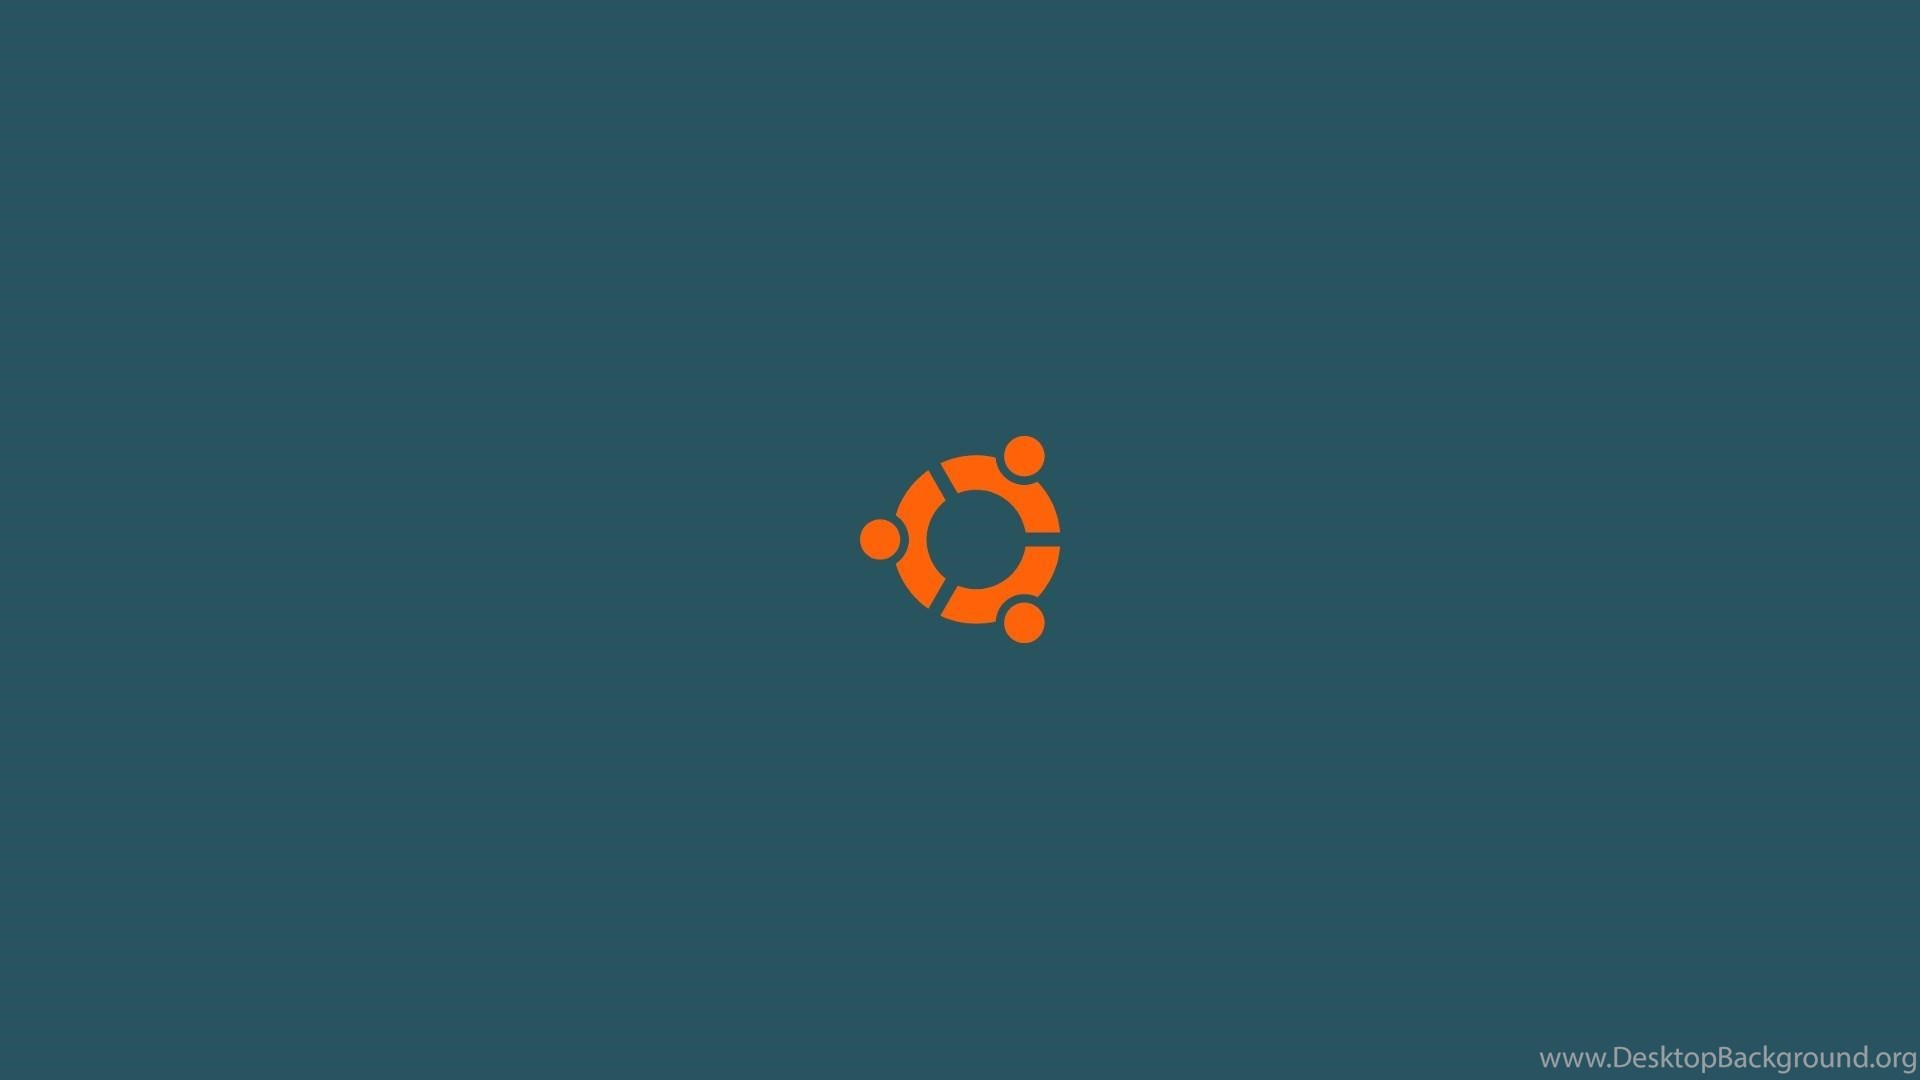 Linux Ubuntu Logos Simple Background Wallpaper Desktop Background